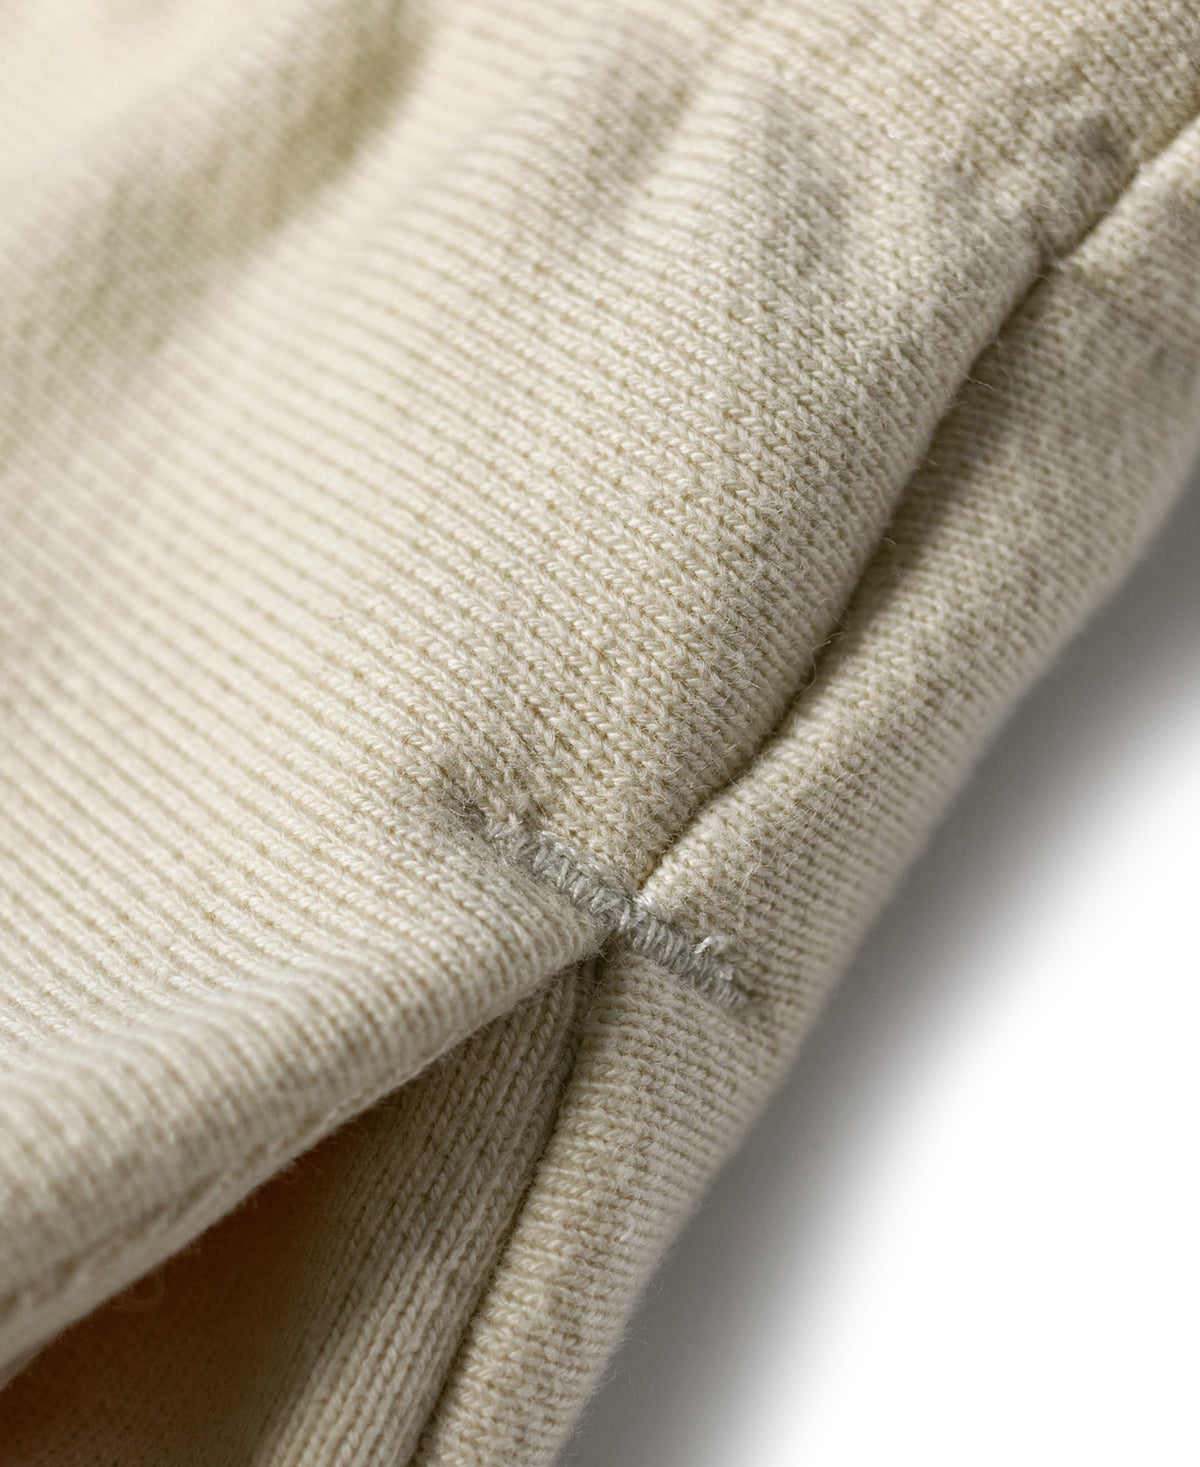 1950s 20.5 oz Terry Cloth Reverse Weave Sweatpants - Apricot